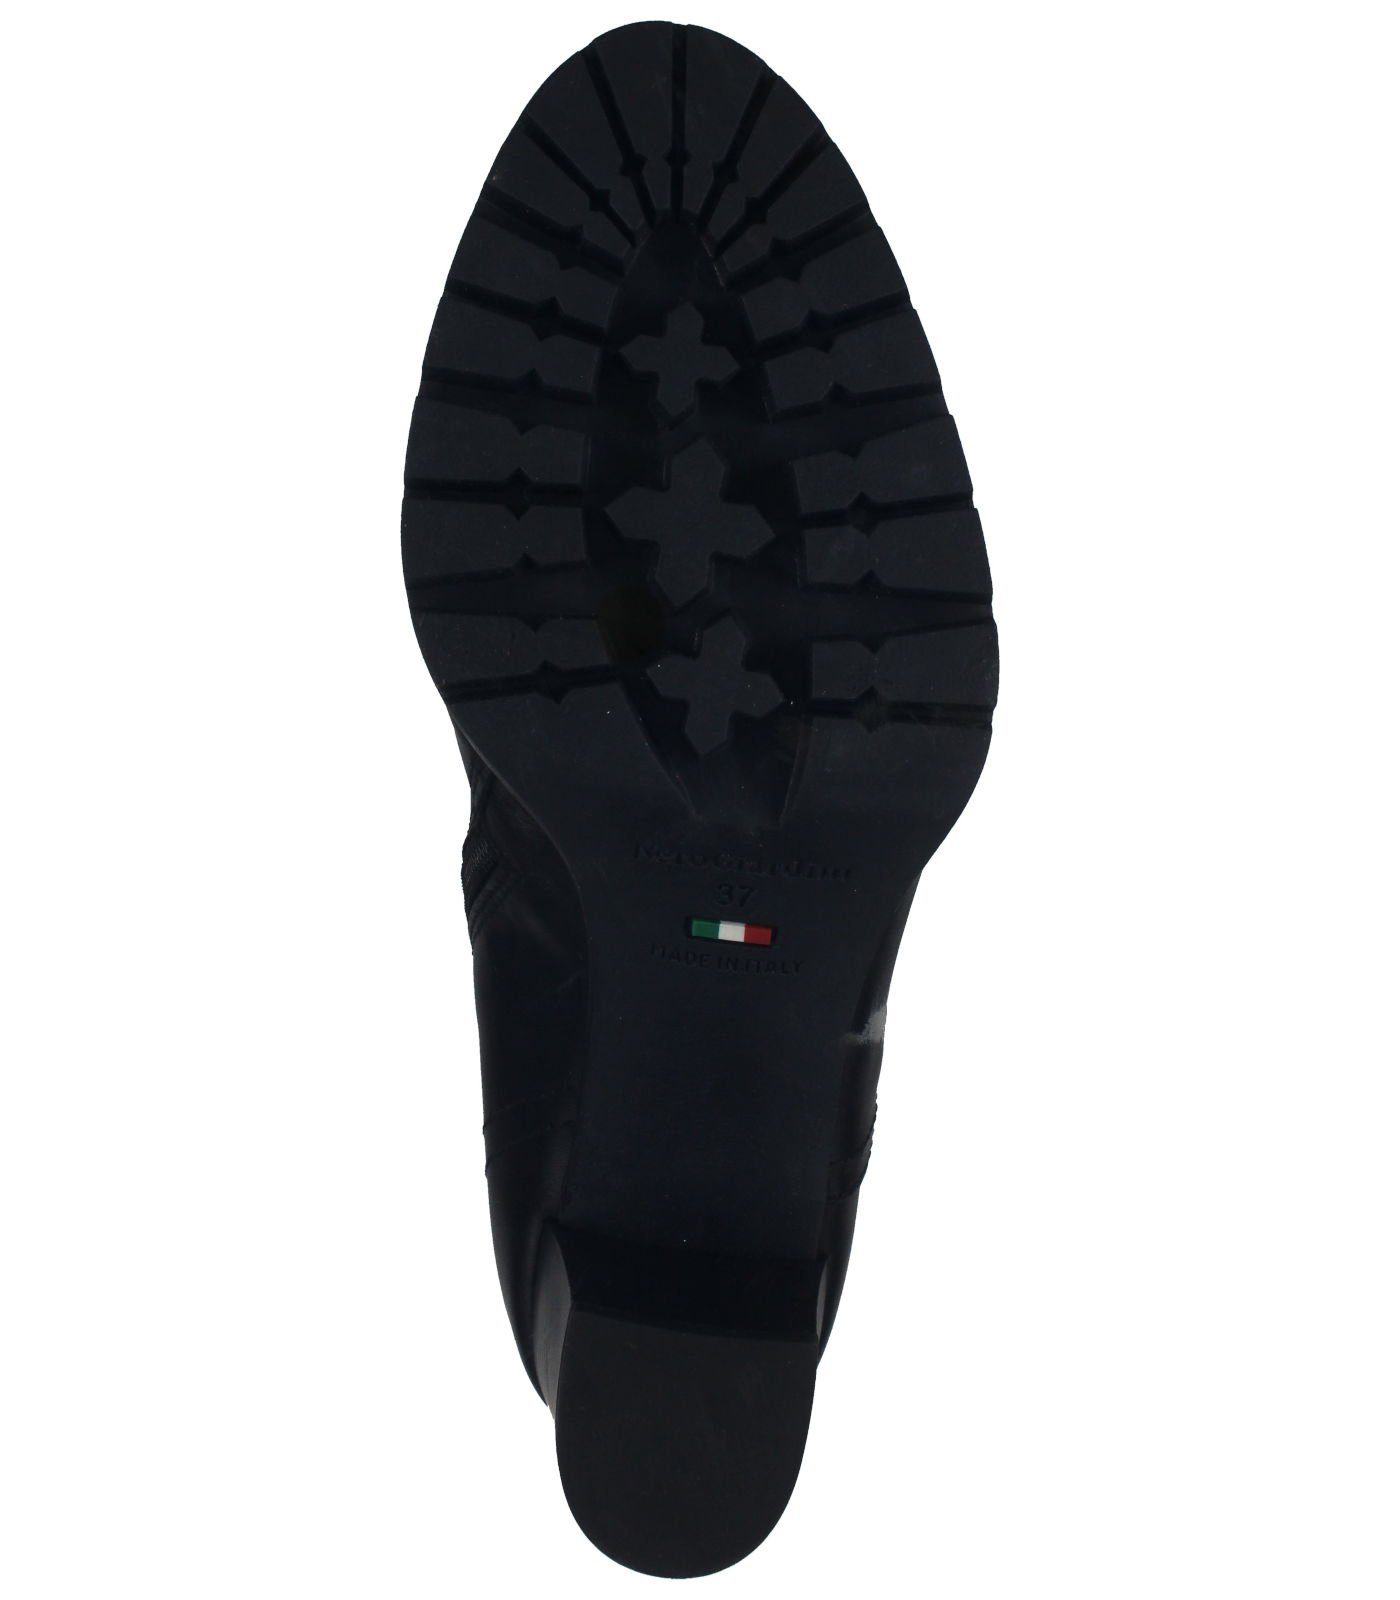 Nero Giardini Stiefelette Leder/Textil Schwarz High-Heel-Stiefelette